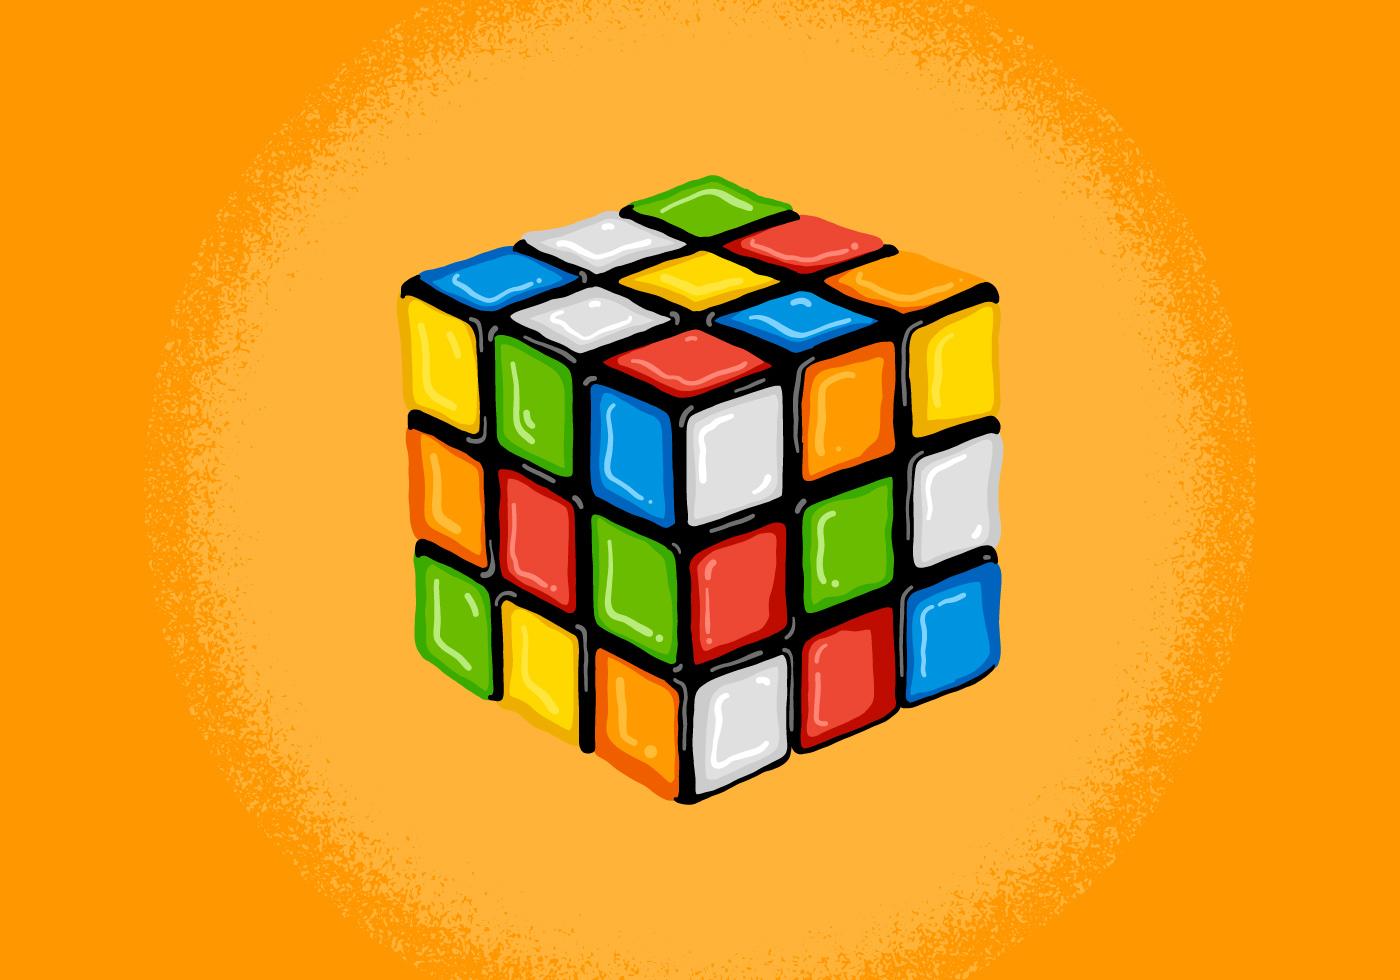 Retro Rubiks Cube Illustration 208395 Vector Art At Vecteezy